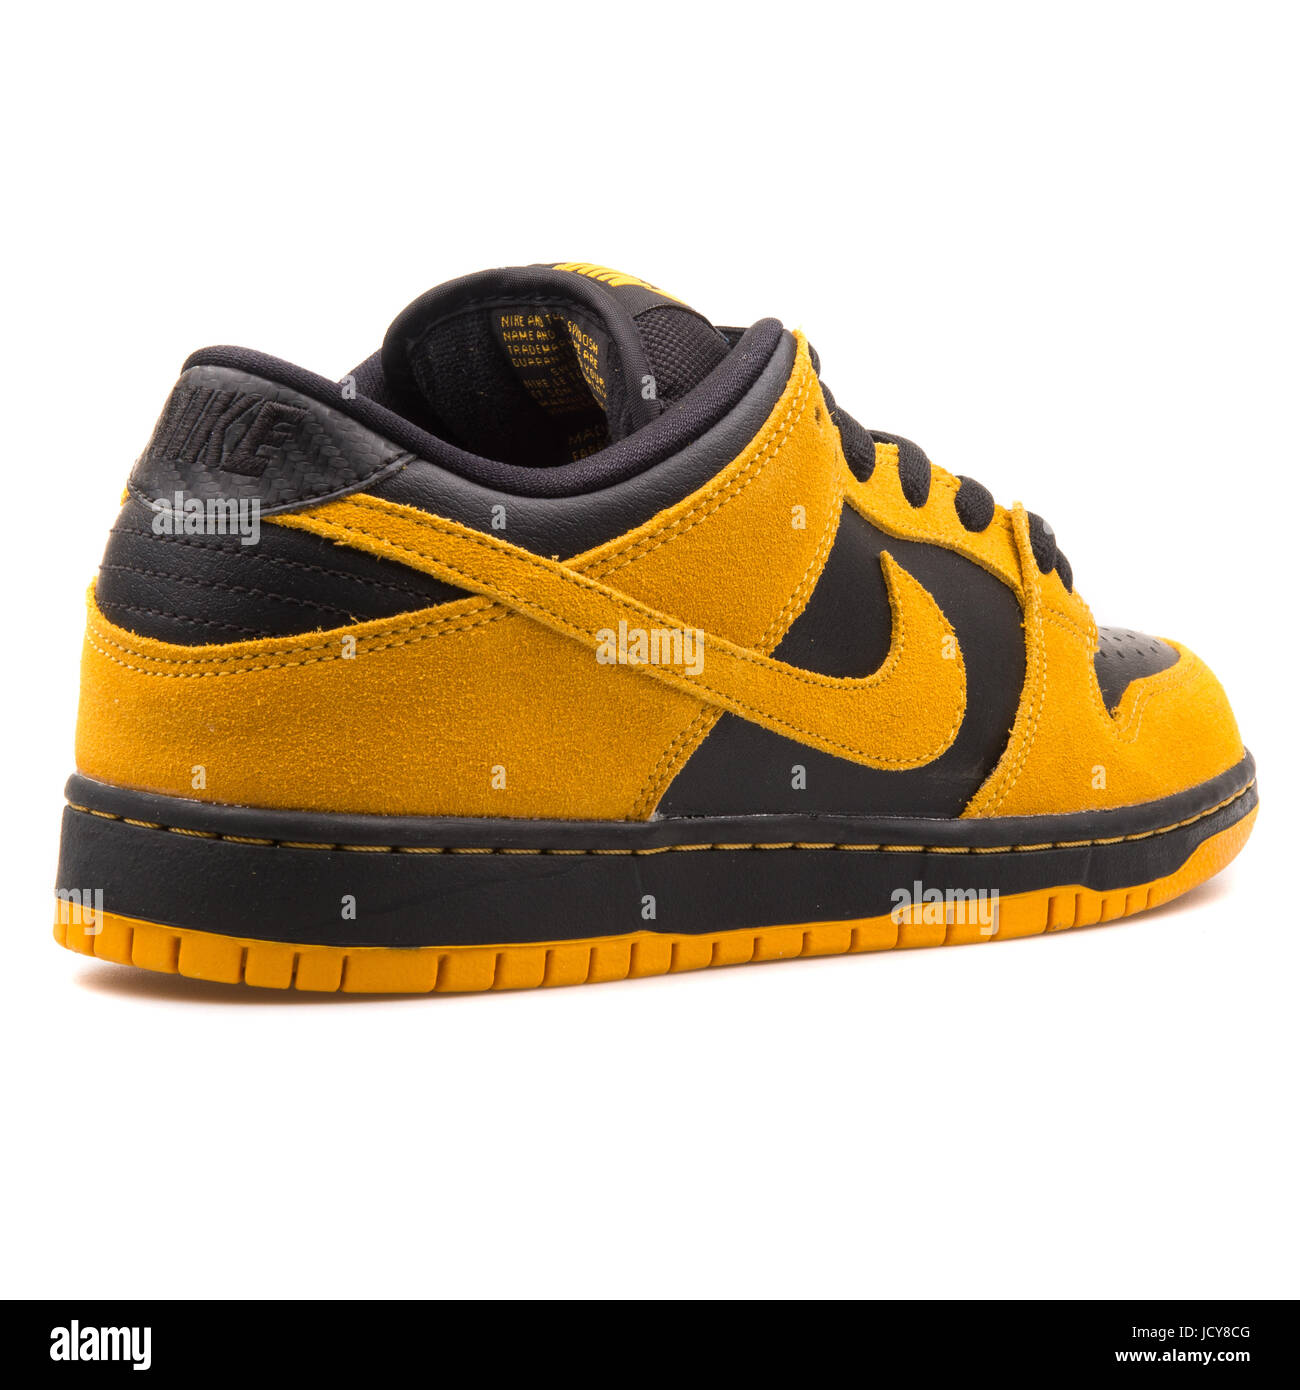 Nike Dunk Low Pro SB Gold Gelb und schwarz Herren Skateboarding Schuhe -  304292-706 Stockfotografie - Alamy